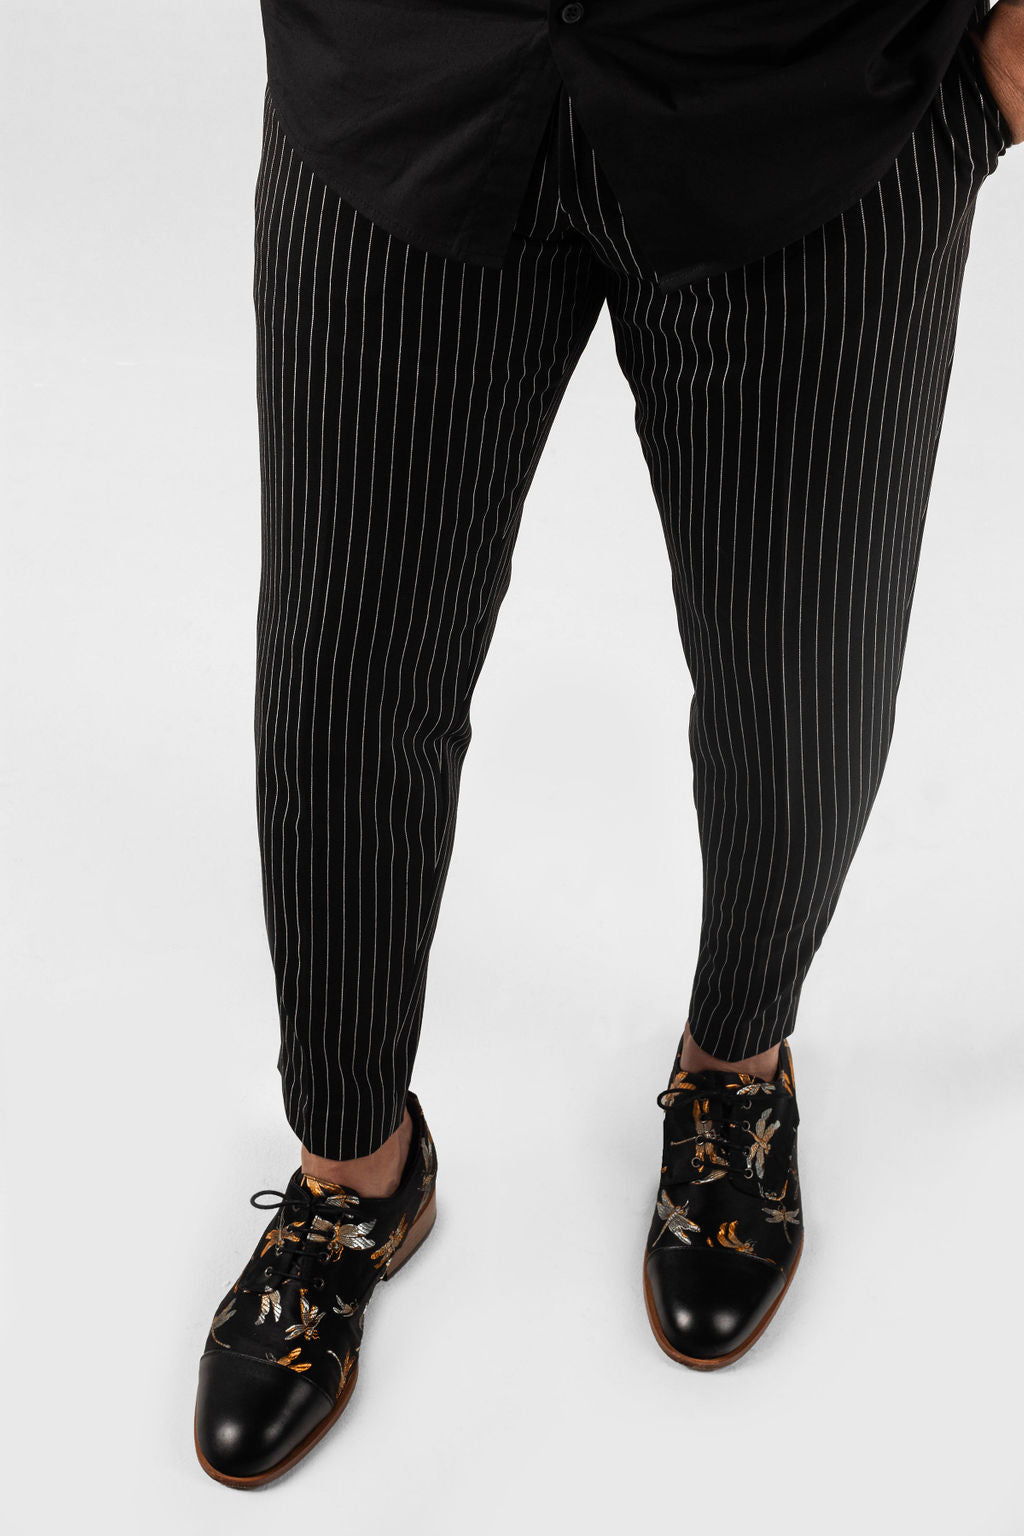 Heidi Stretchy Tapered Cotton Jogger Pants - White/Black Stripe